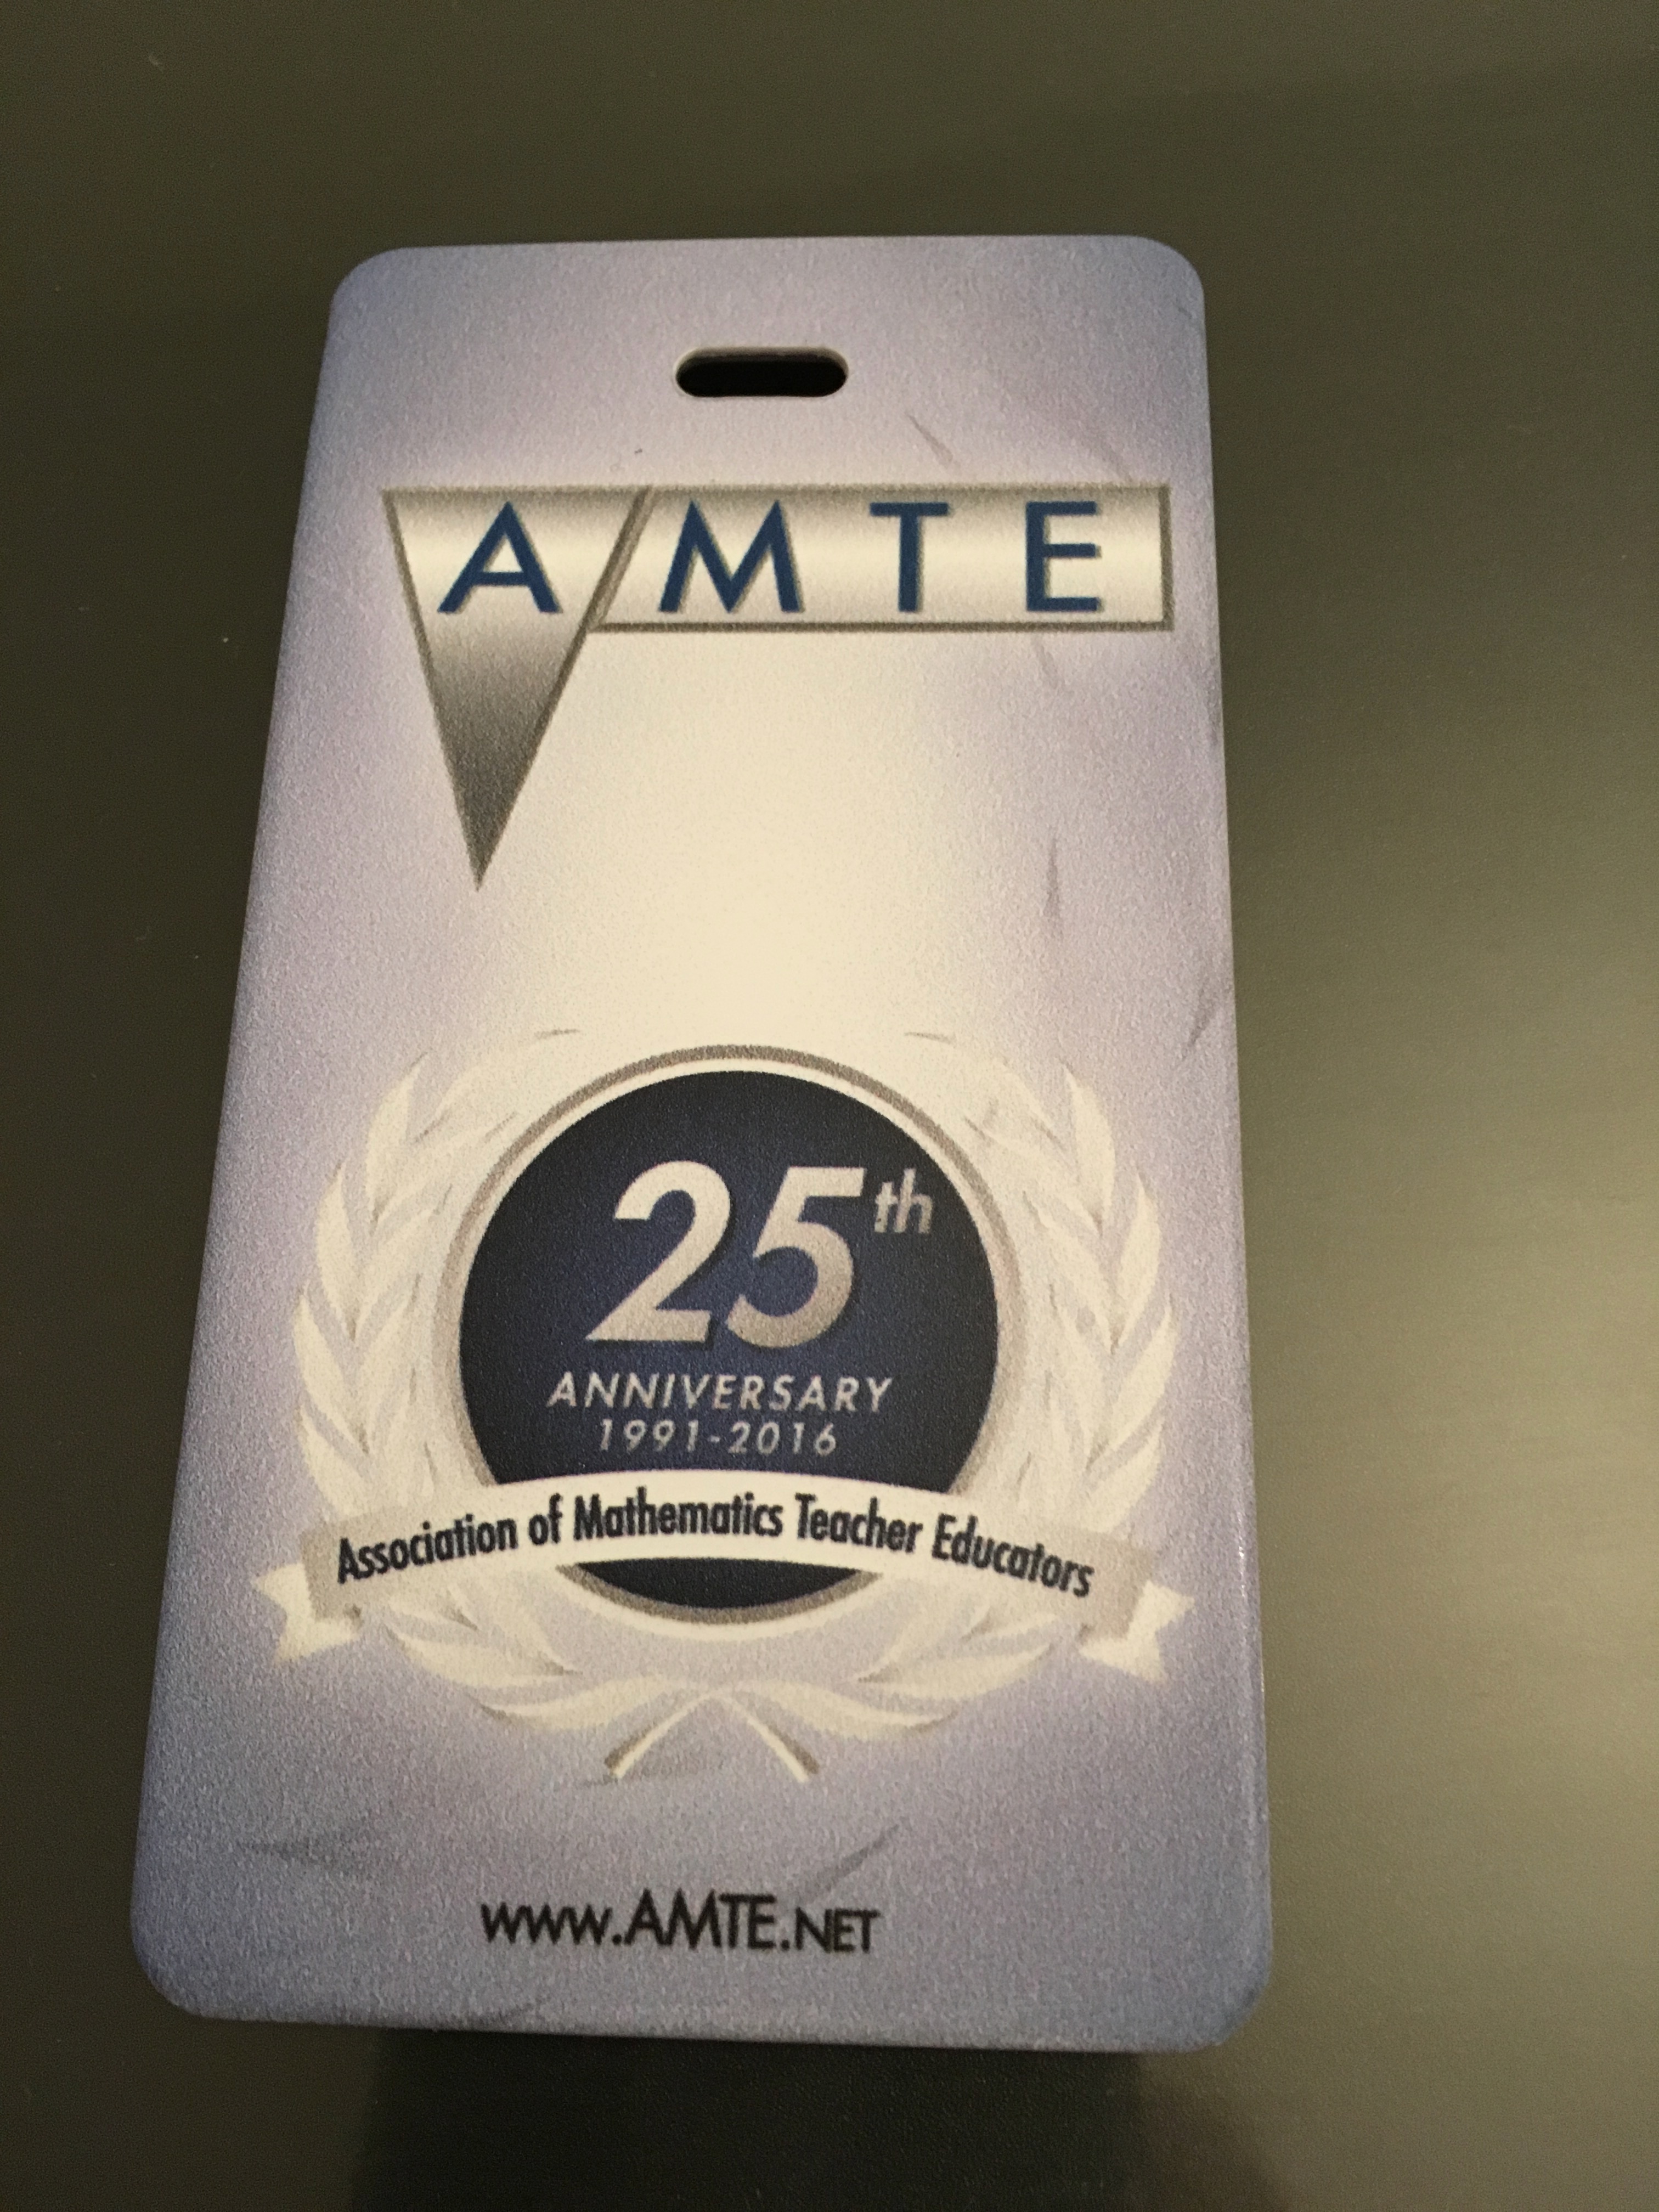 Celebrating AMTE's 25th Anniversary!